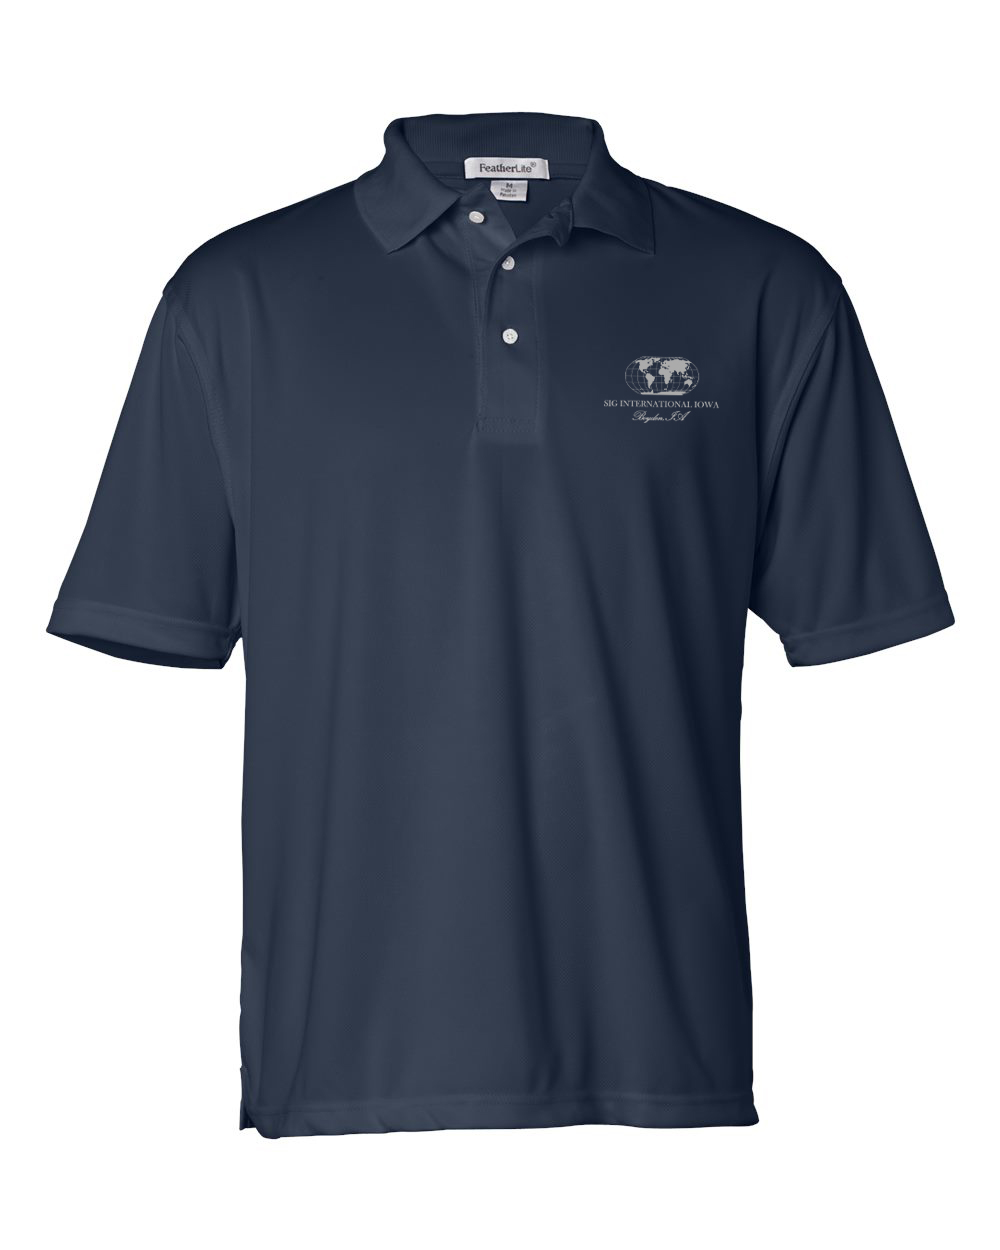 custom design of FeatherLite 0469 Moisture Free PiqueSport Shirt